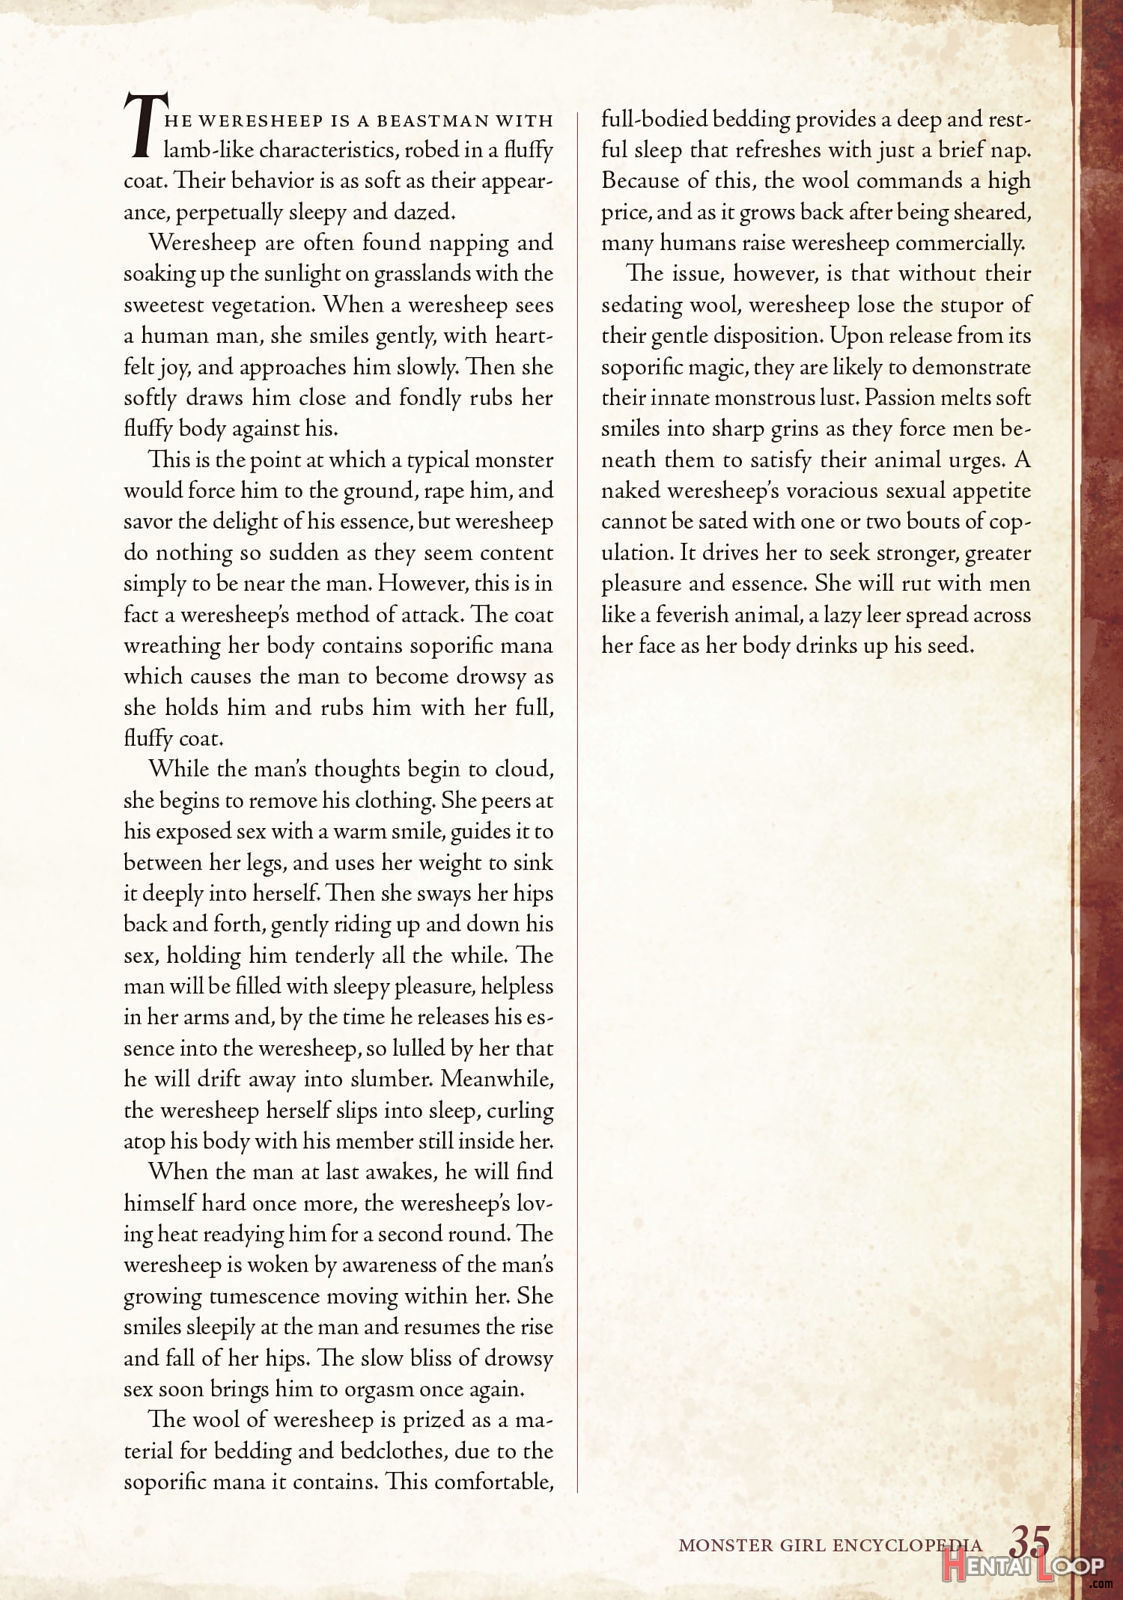 Monster Girl Encyclopedia Vol. 1 page 36